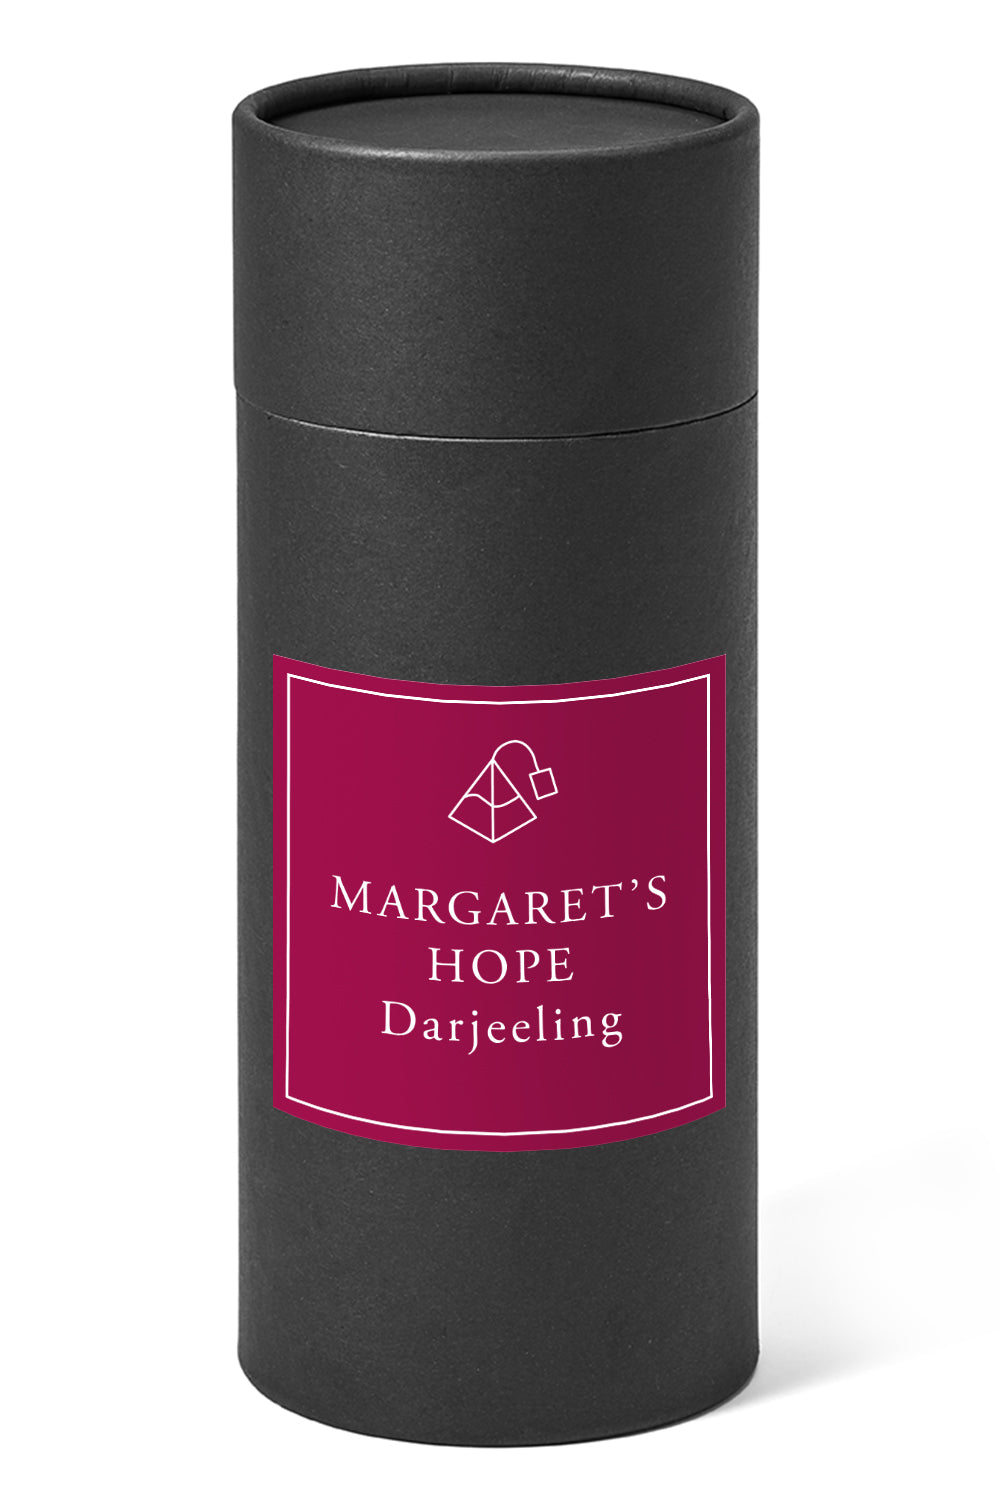 Margaret's Hope Darjeeling (pyramid bags)-40 pyramids gift-Loose Leaf Tea-High Teas